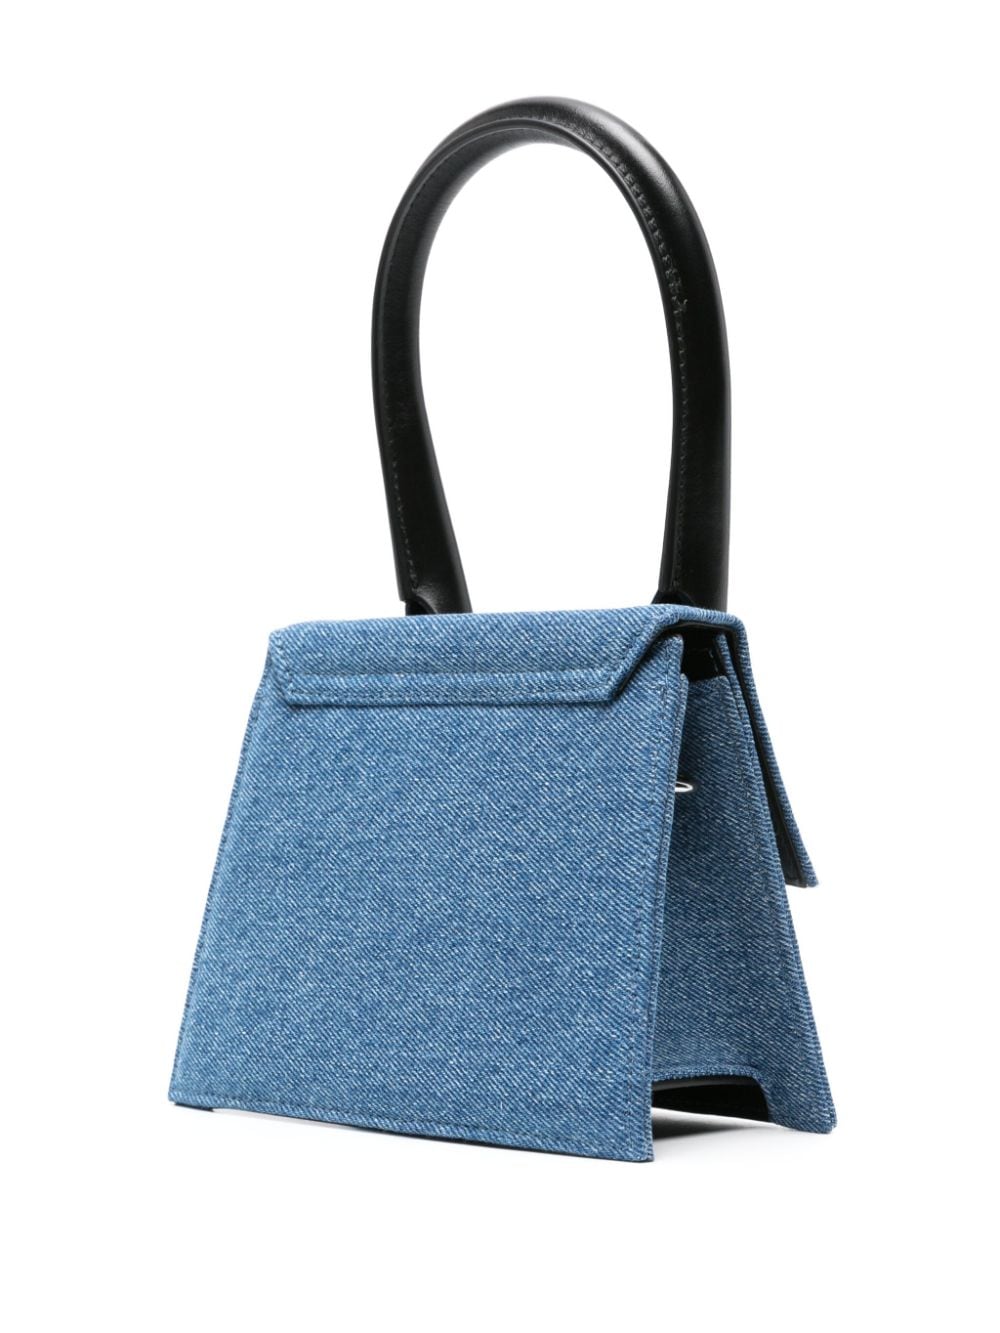 Indigo Blue Cotton Denim Handbag for Women with Silver-Tone Logo and Adjustable Shoulder Strap